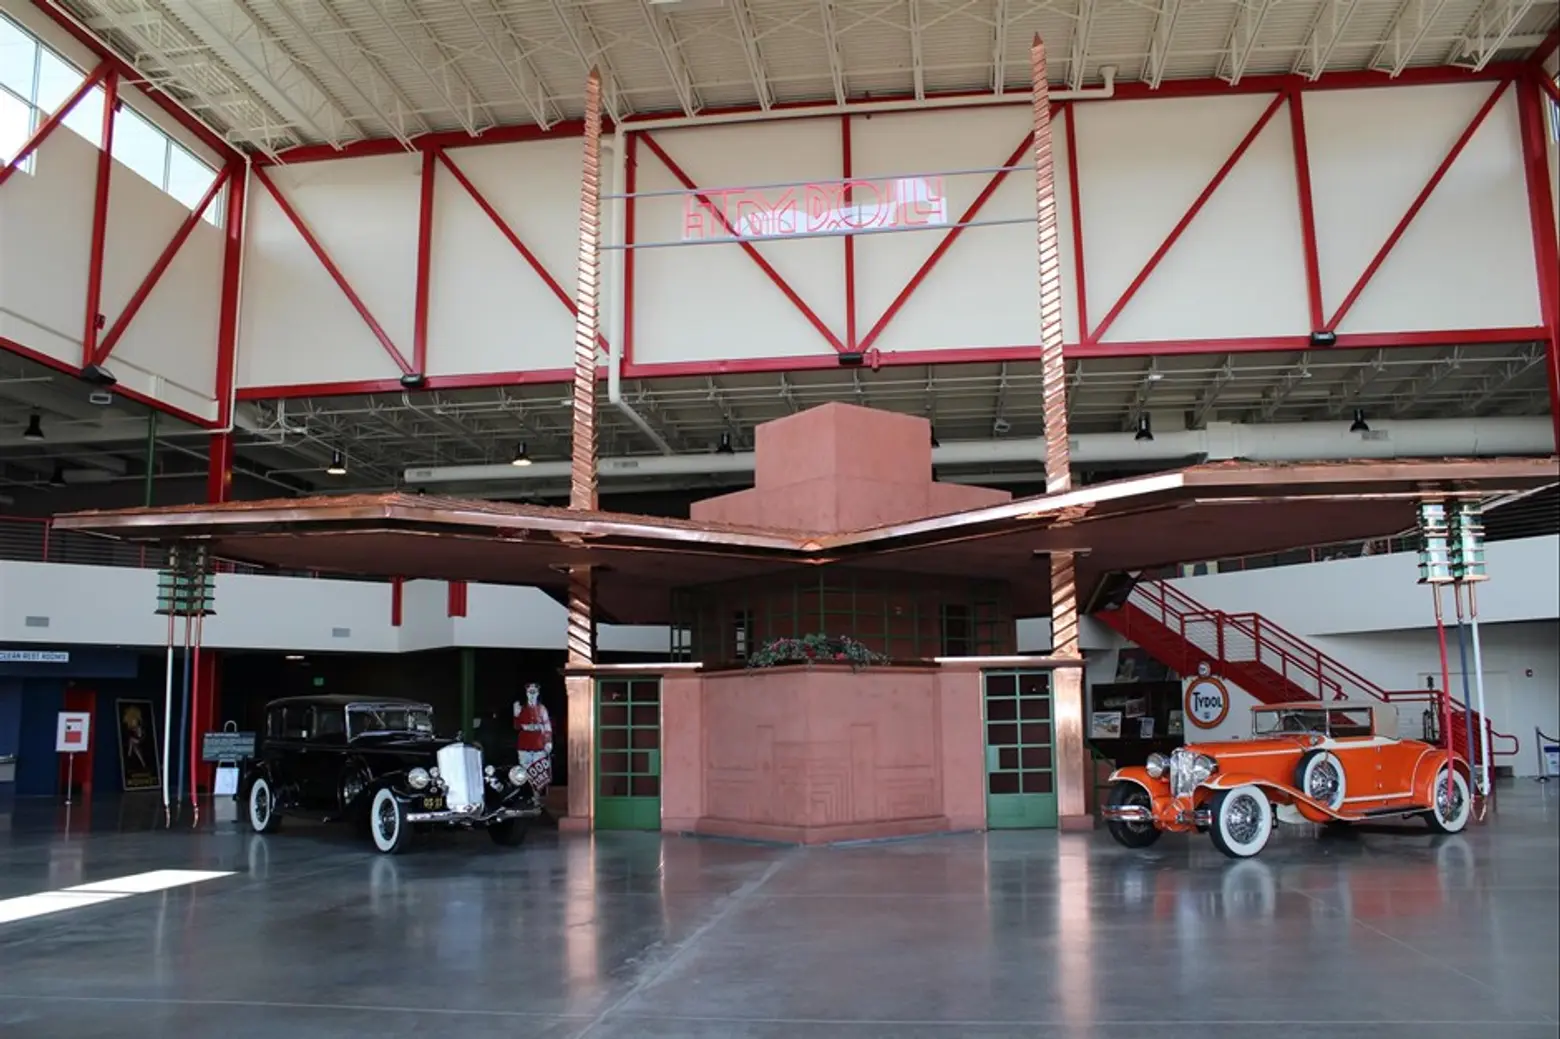 A full-scale model of Frank Lloyd Wright's unbuilt gas station design